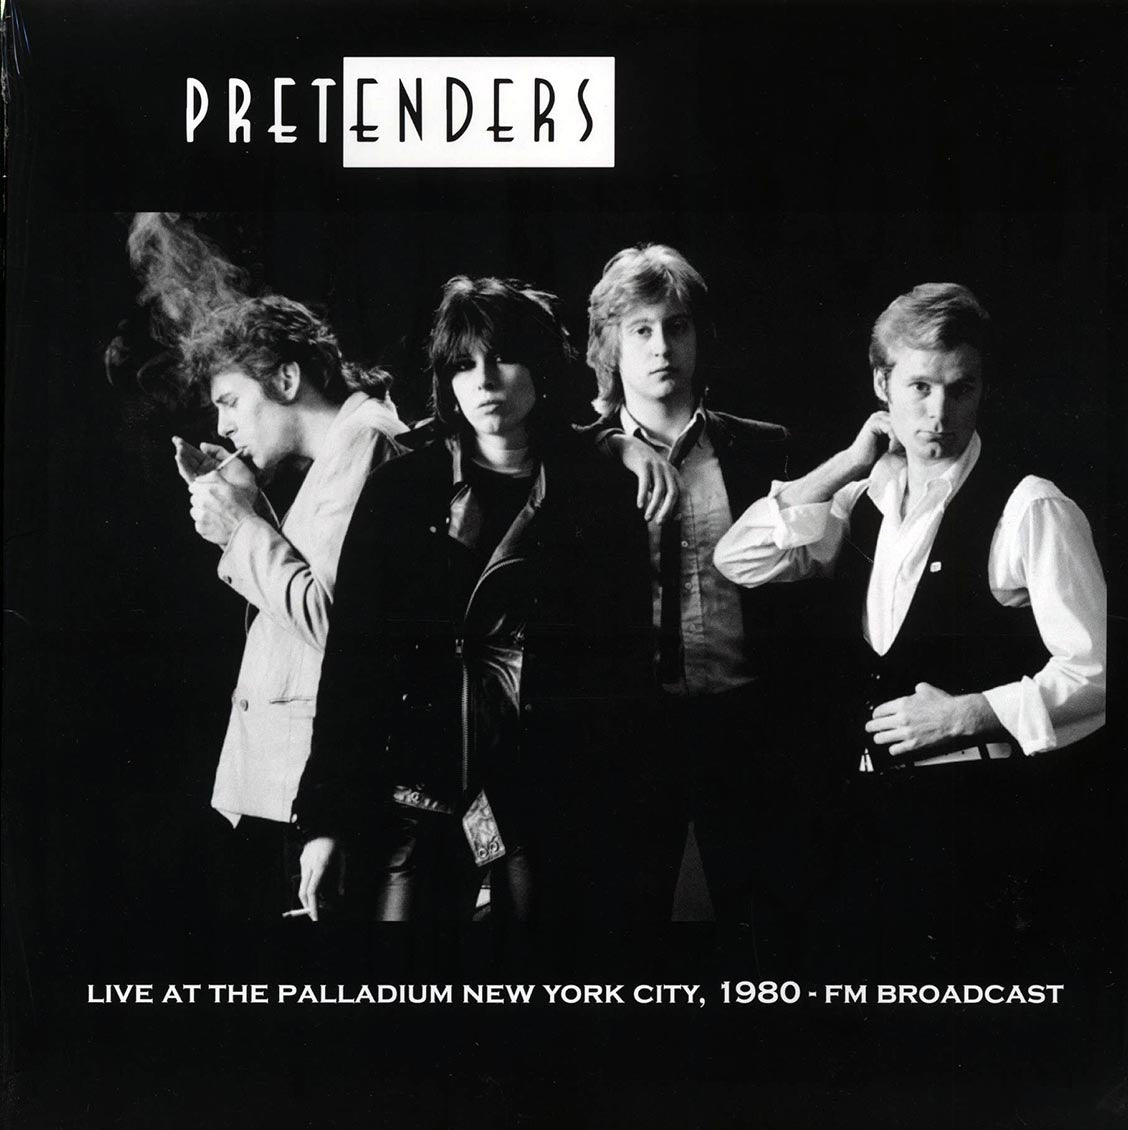 The Pretenders - Live At The Palladium New York City, 1980: FM Broadcast (ltd. 500 copies made) - Vinyl LP